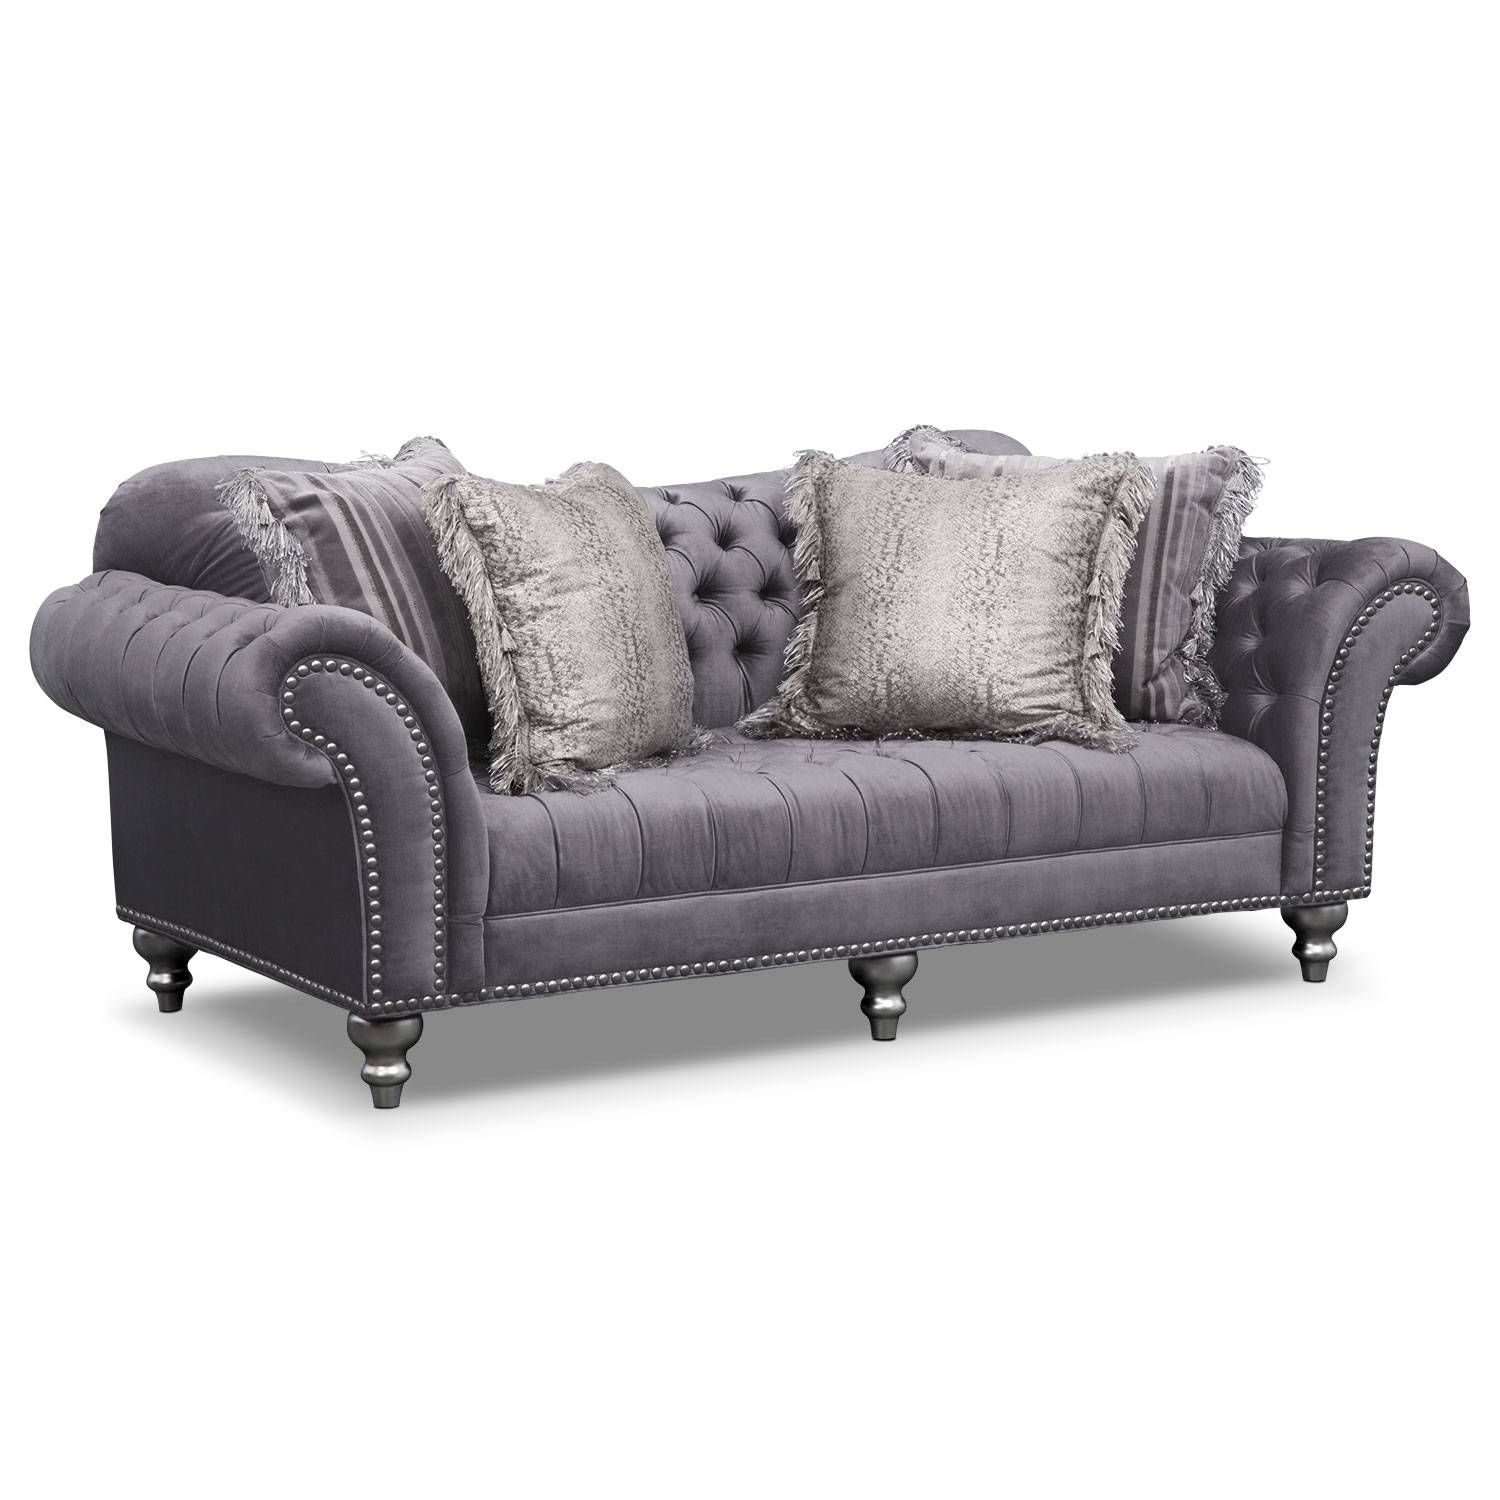 Decor: Endearing Maximize Sofa Throws For Gorgeous Living Room Regarding Grey Throws For Sofas (View 25 of 30)